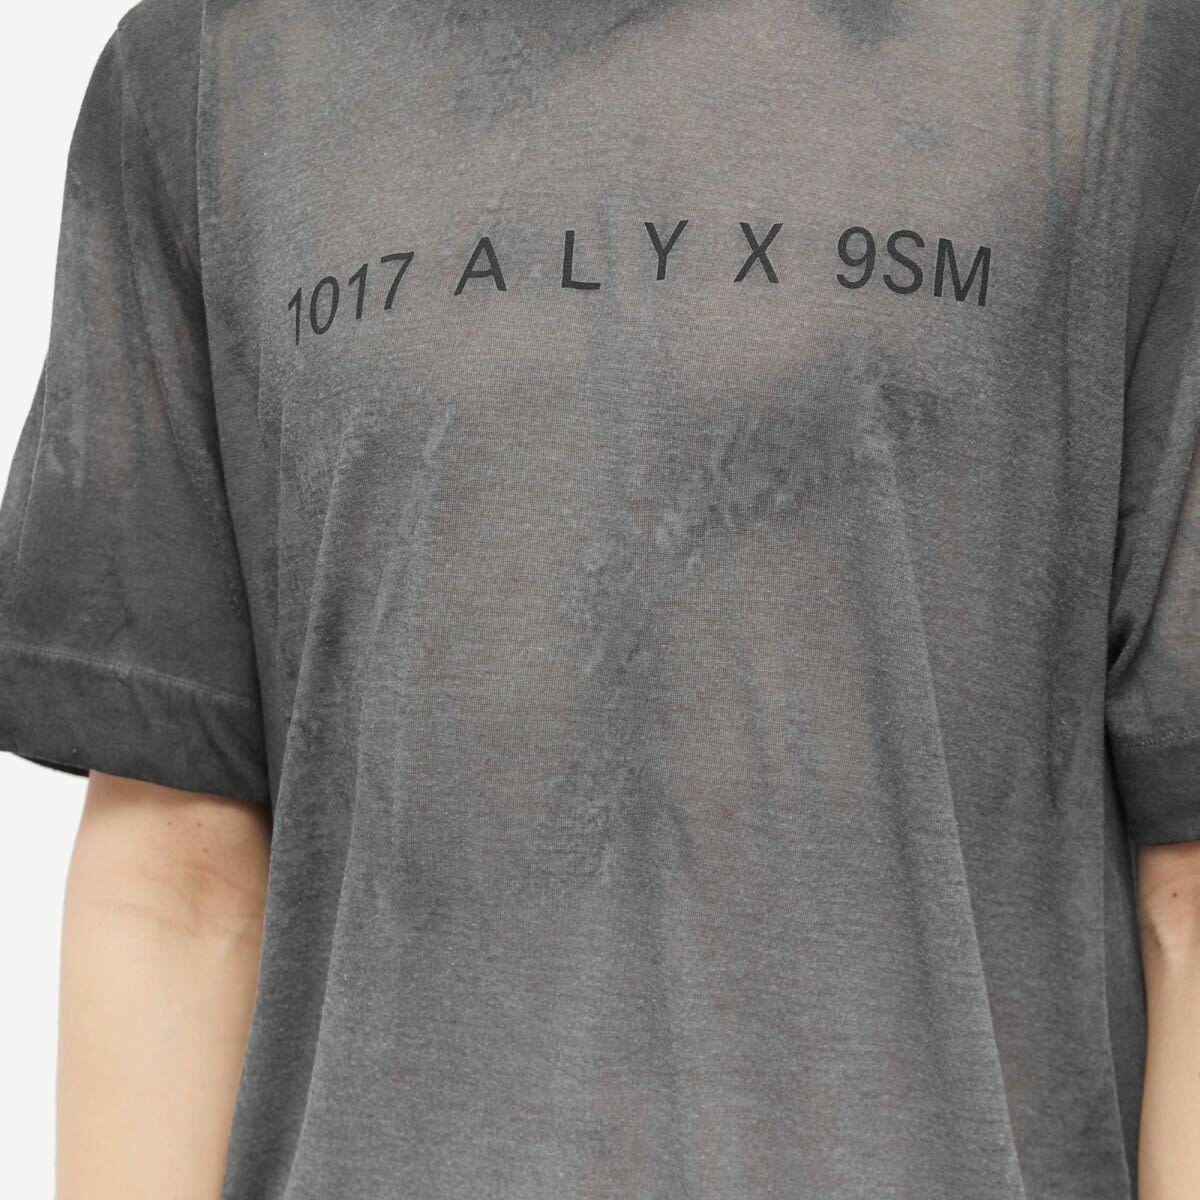 1017 ALYX 9SM Men's Transluscent Graphic T-Shirt in Black 1017 ALYX 9SM